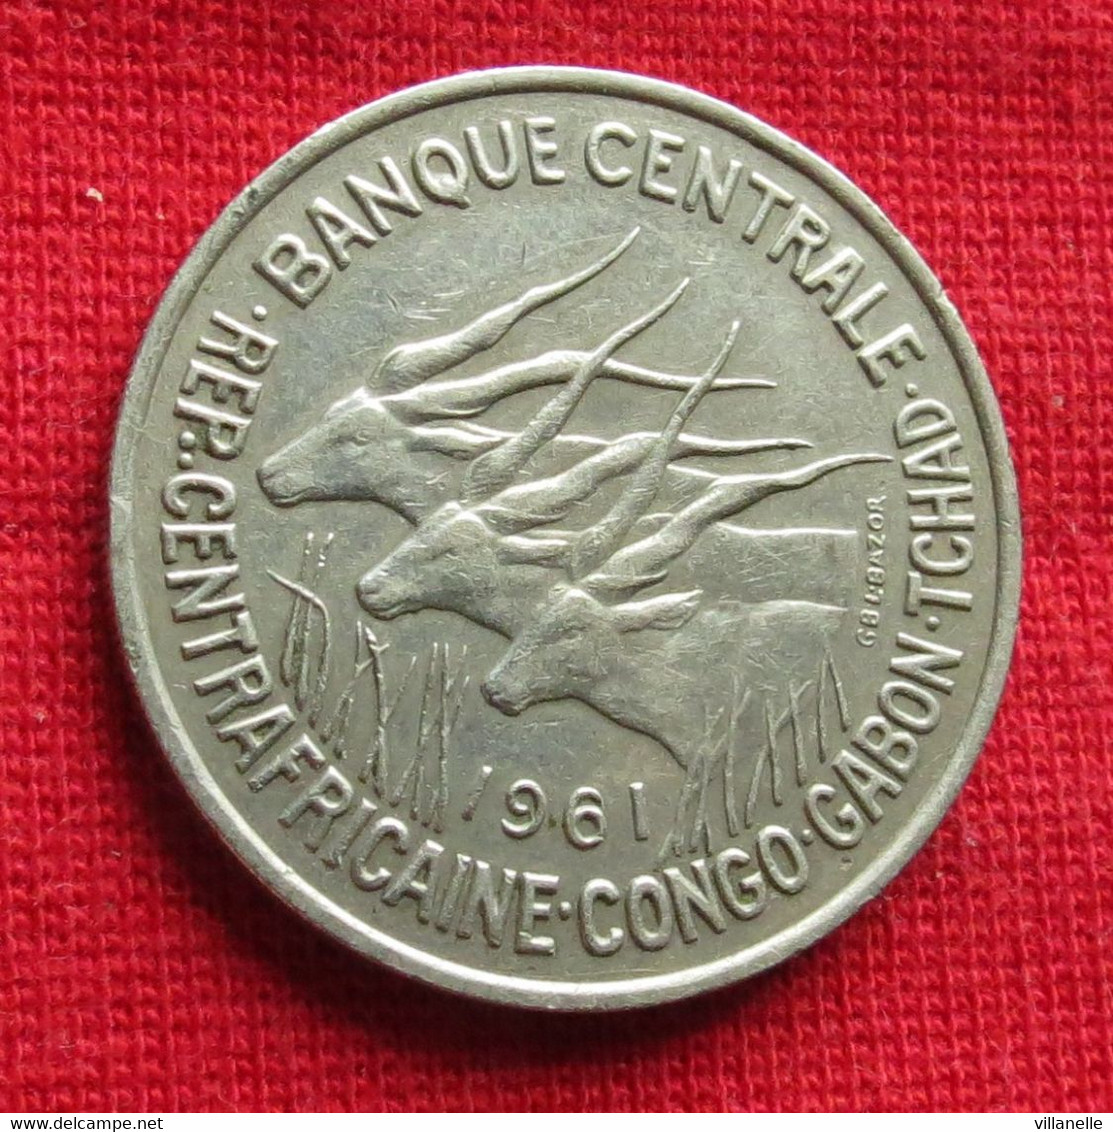 Central African Republic Congo Chade Gabon 50 Francs 1961  Wºº - Centraal-Afrikaanse Republiek